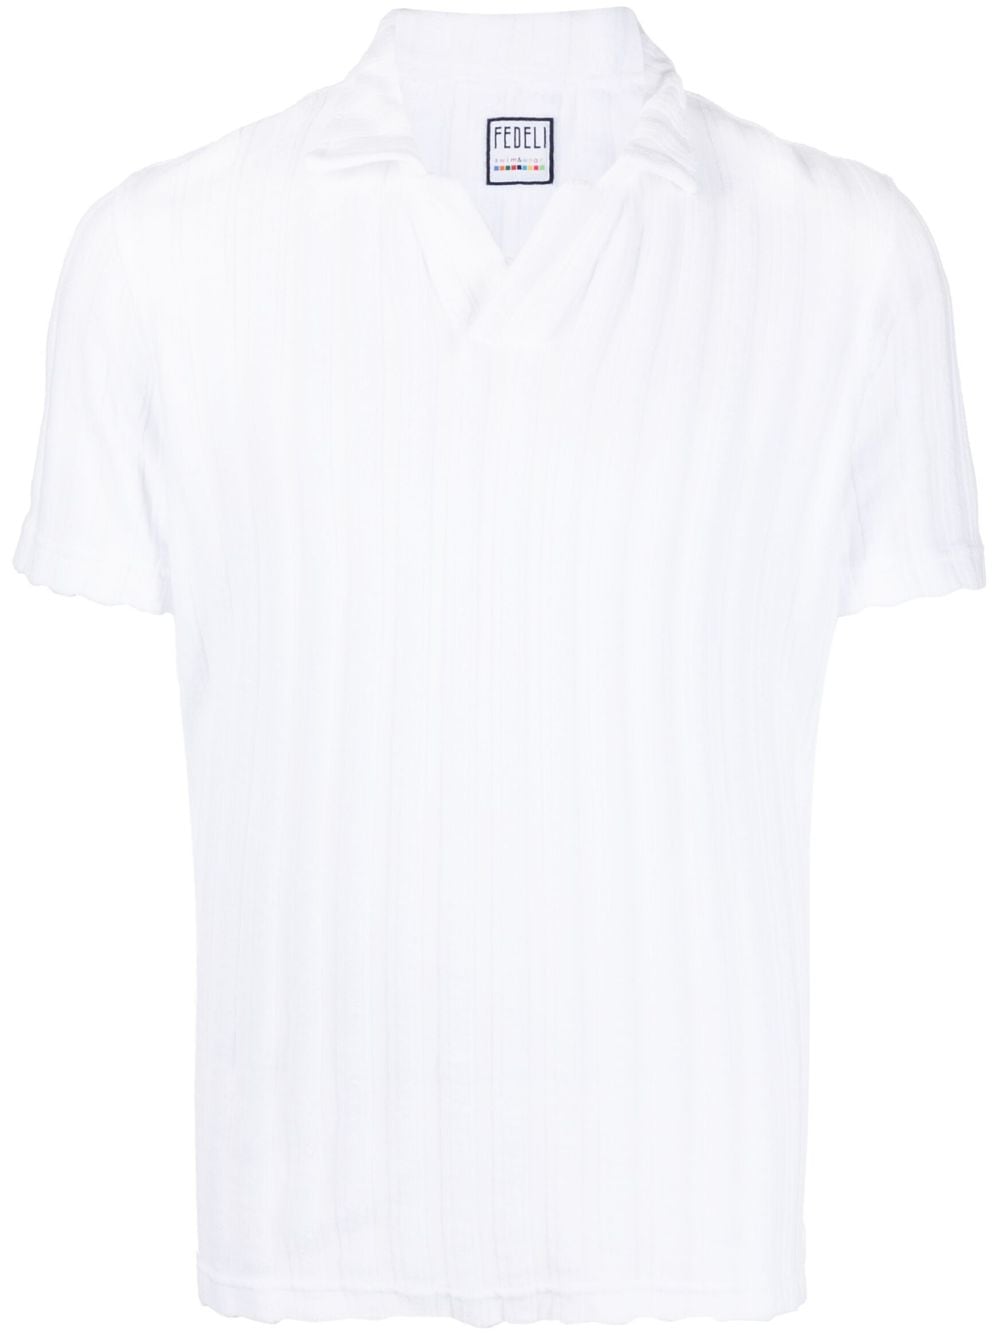 Fedeli Grob geripptes Poloshirt - Weiß von Fedeli